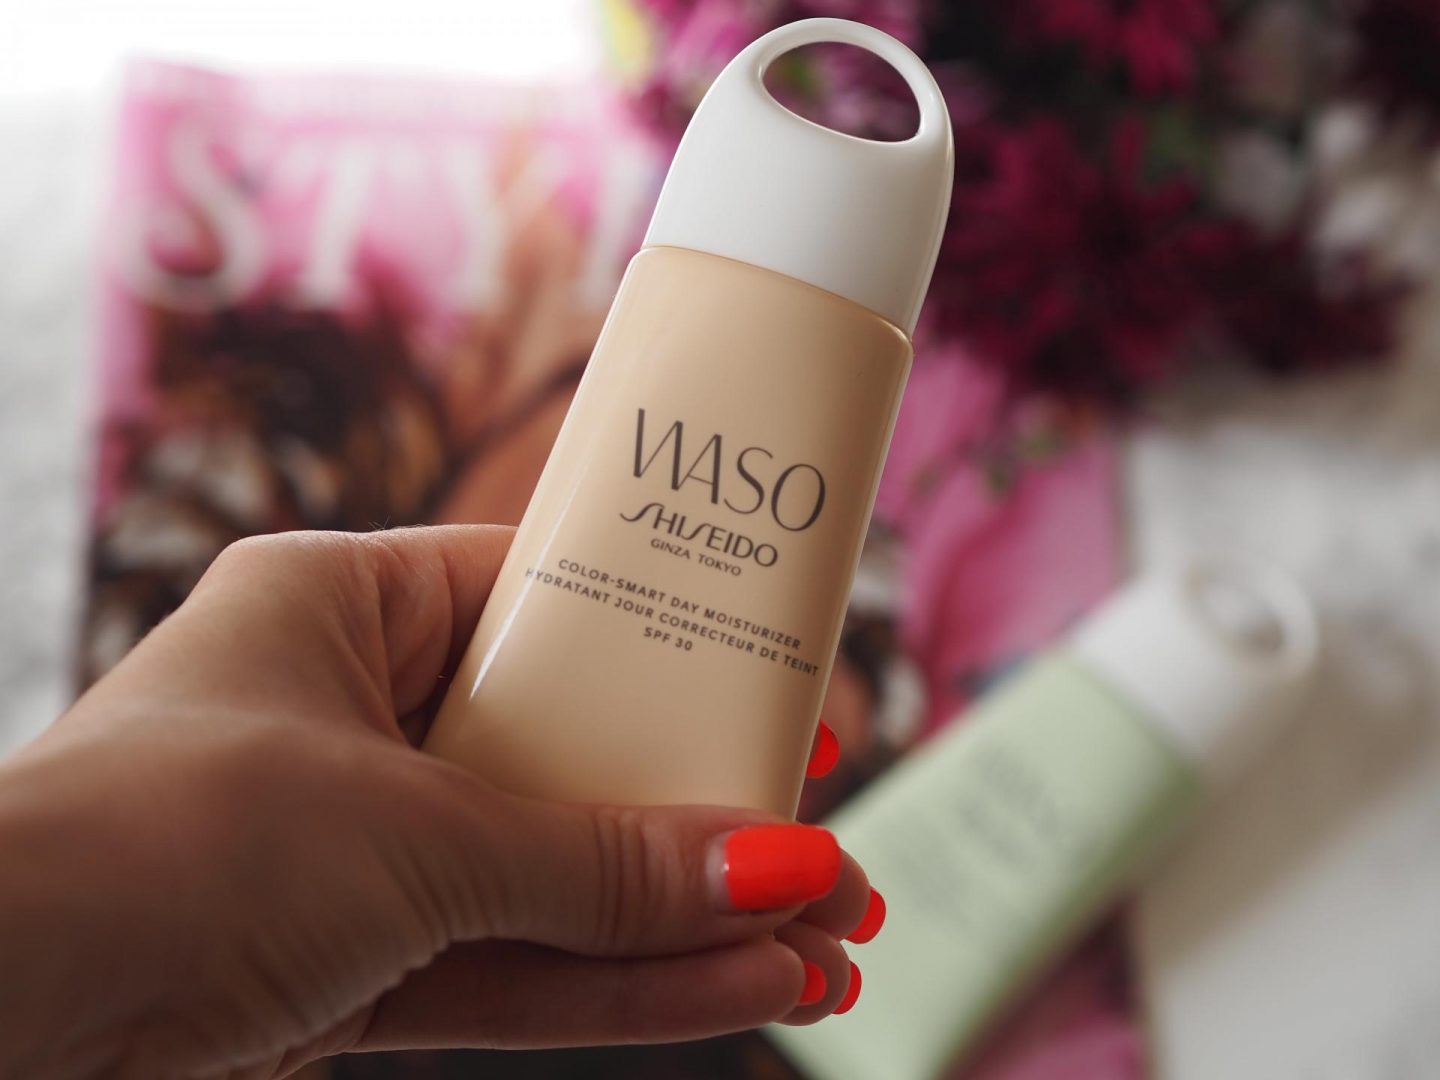 Japanese Beauty - Product: Shiseido WasoColor-Smart Day Moisturiser SPF 30 – Carrot